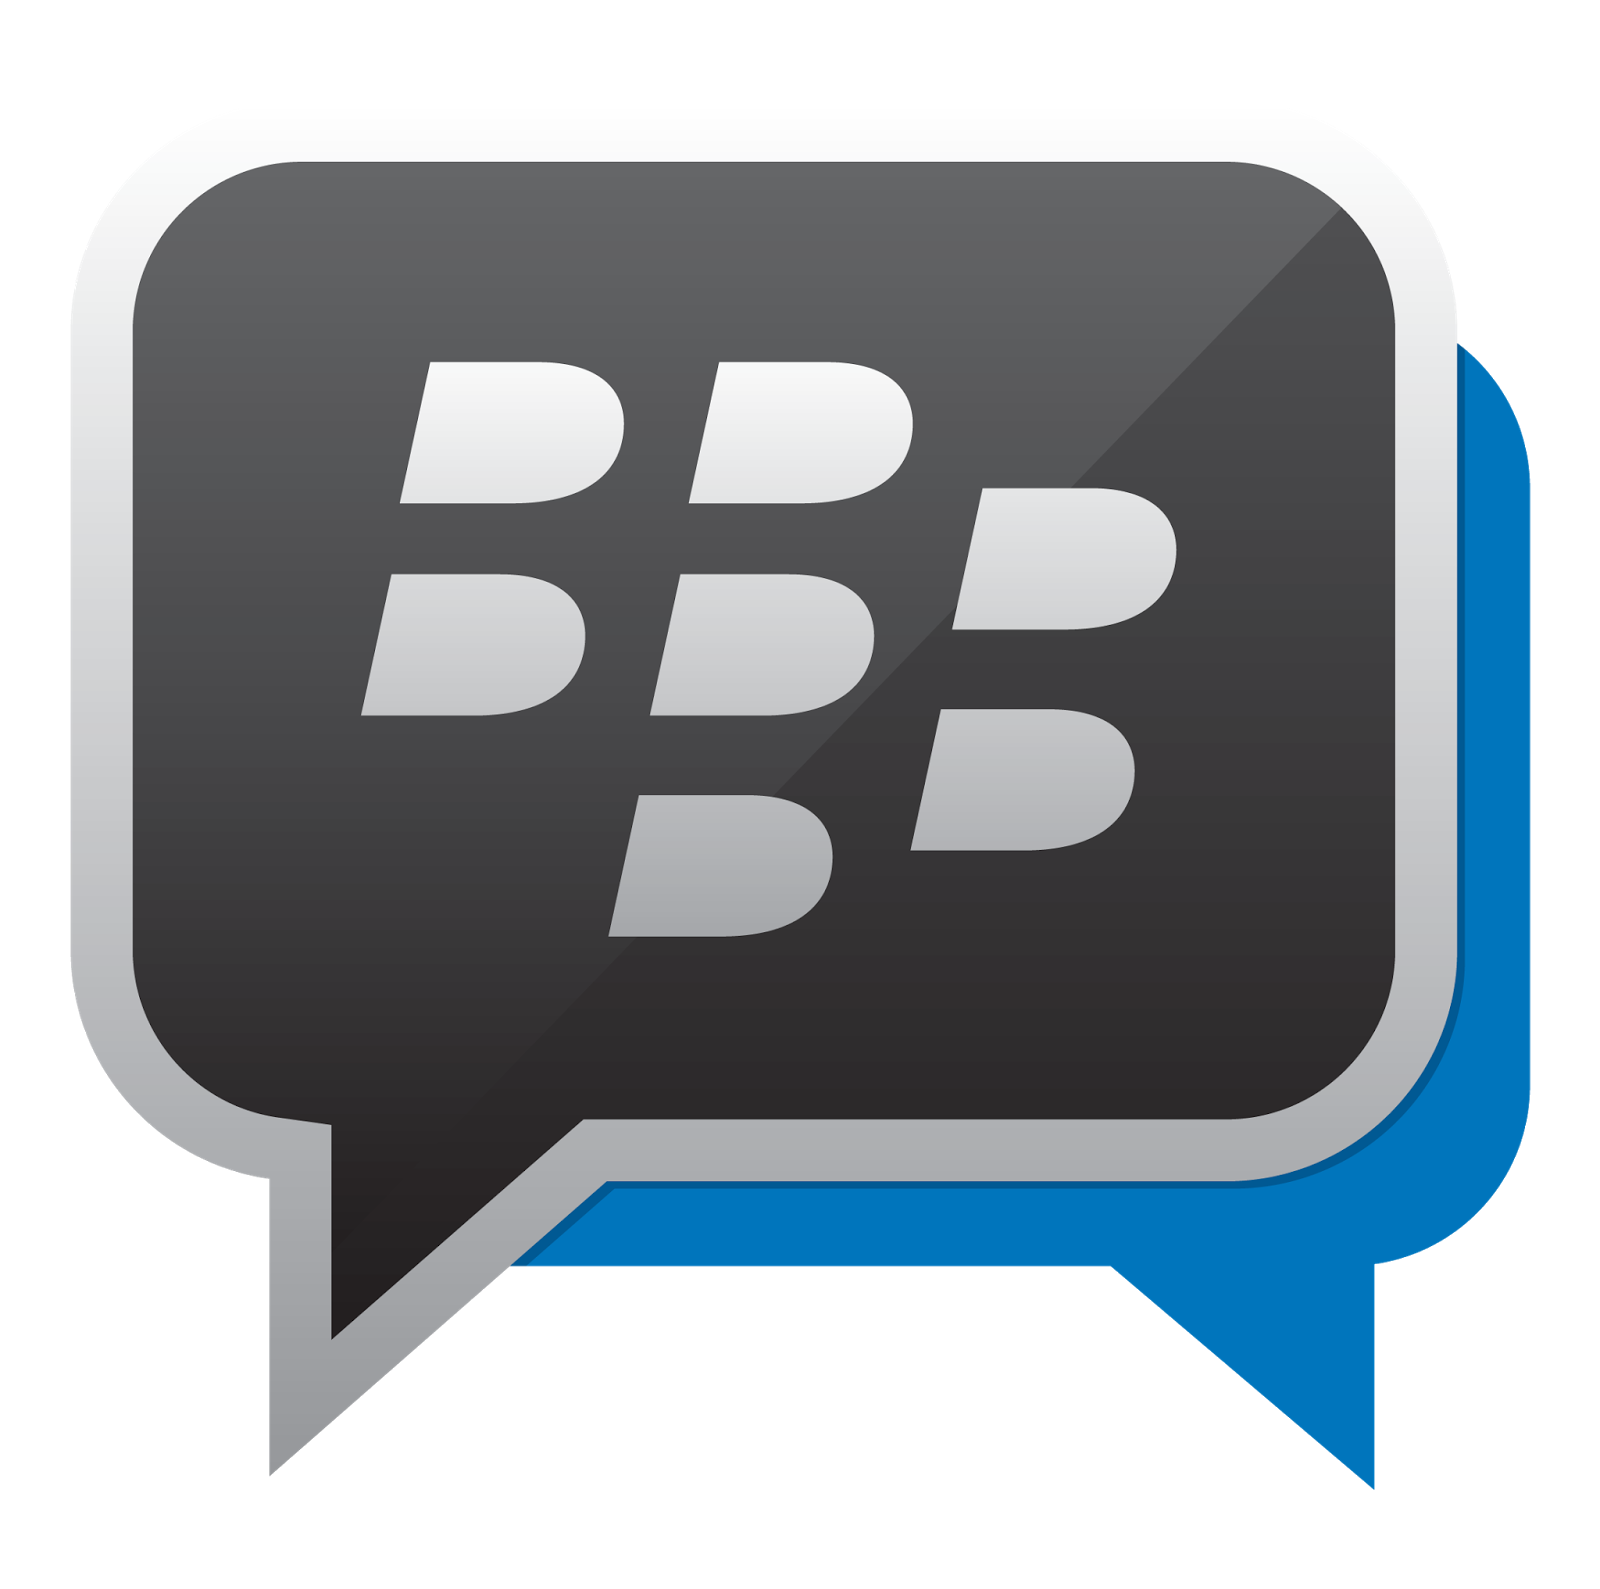 Download Free Bbm Instant Messenger) Ios Messenger Blackberry Logo Pluspng.com  - Blackberry, Transparent background PNG HD thumbnail